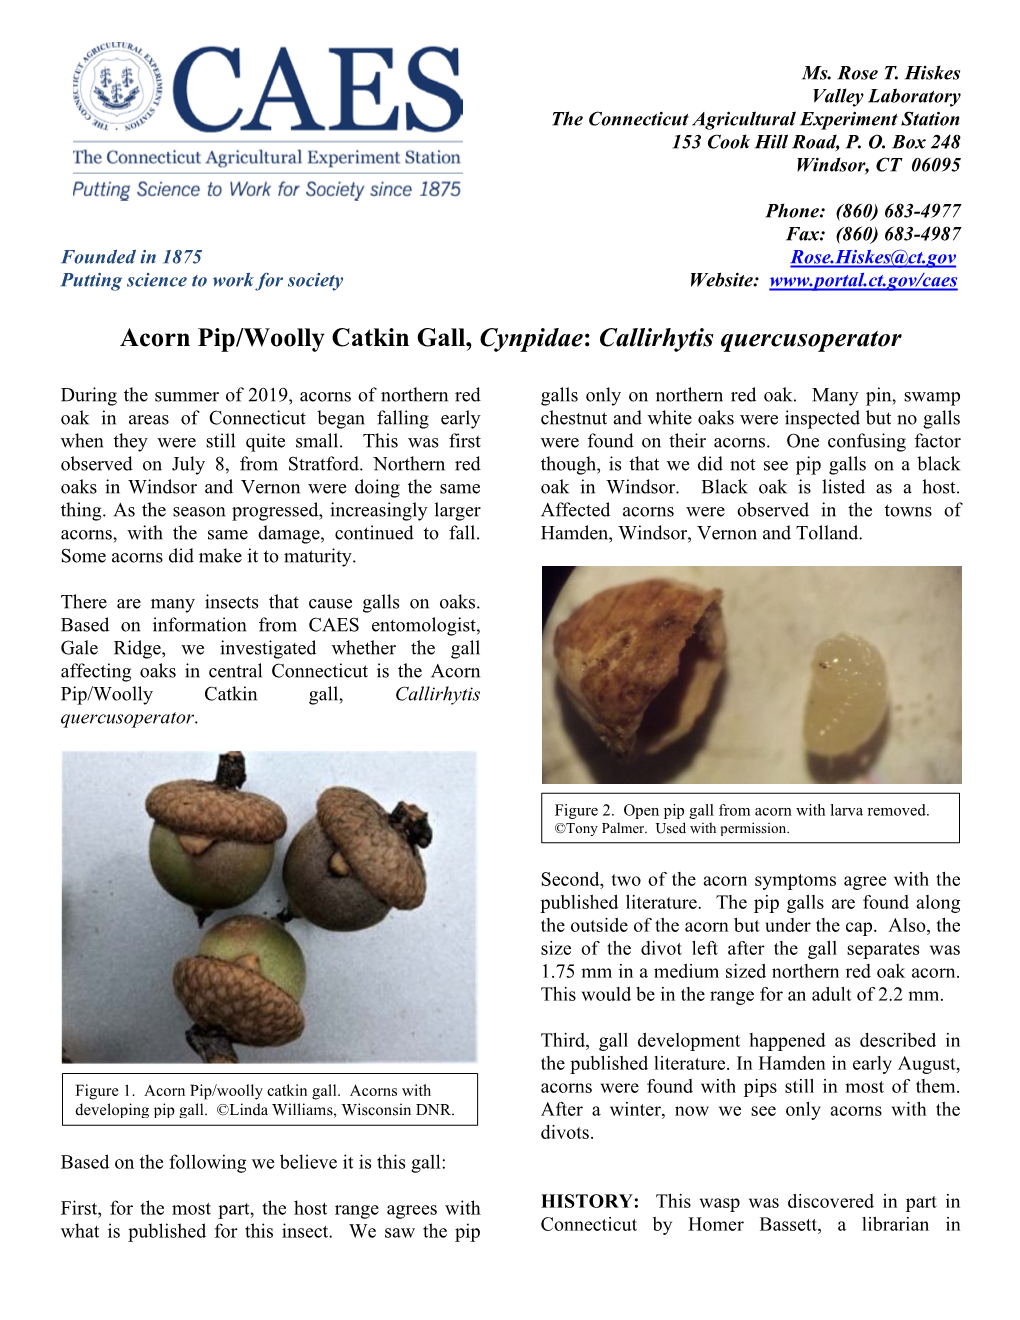 Acorn Pip/Woolly Catkin Gall, Cynpidae: Callirhytis Quercusoperator